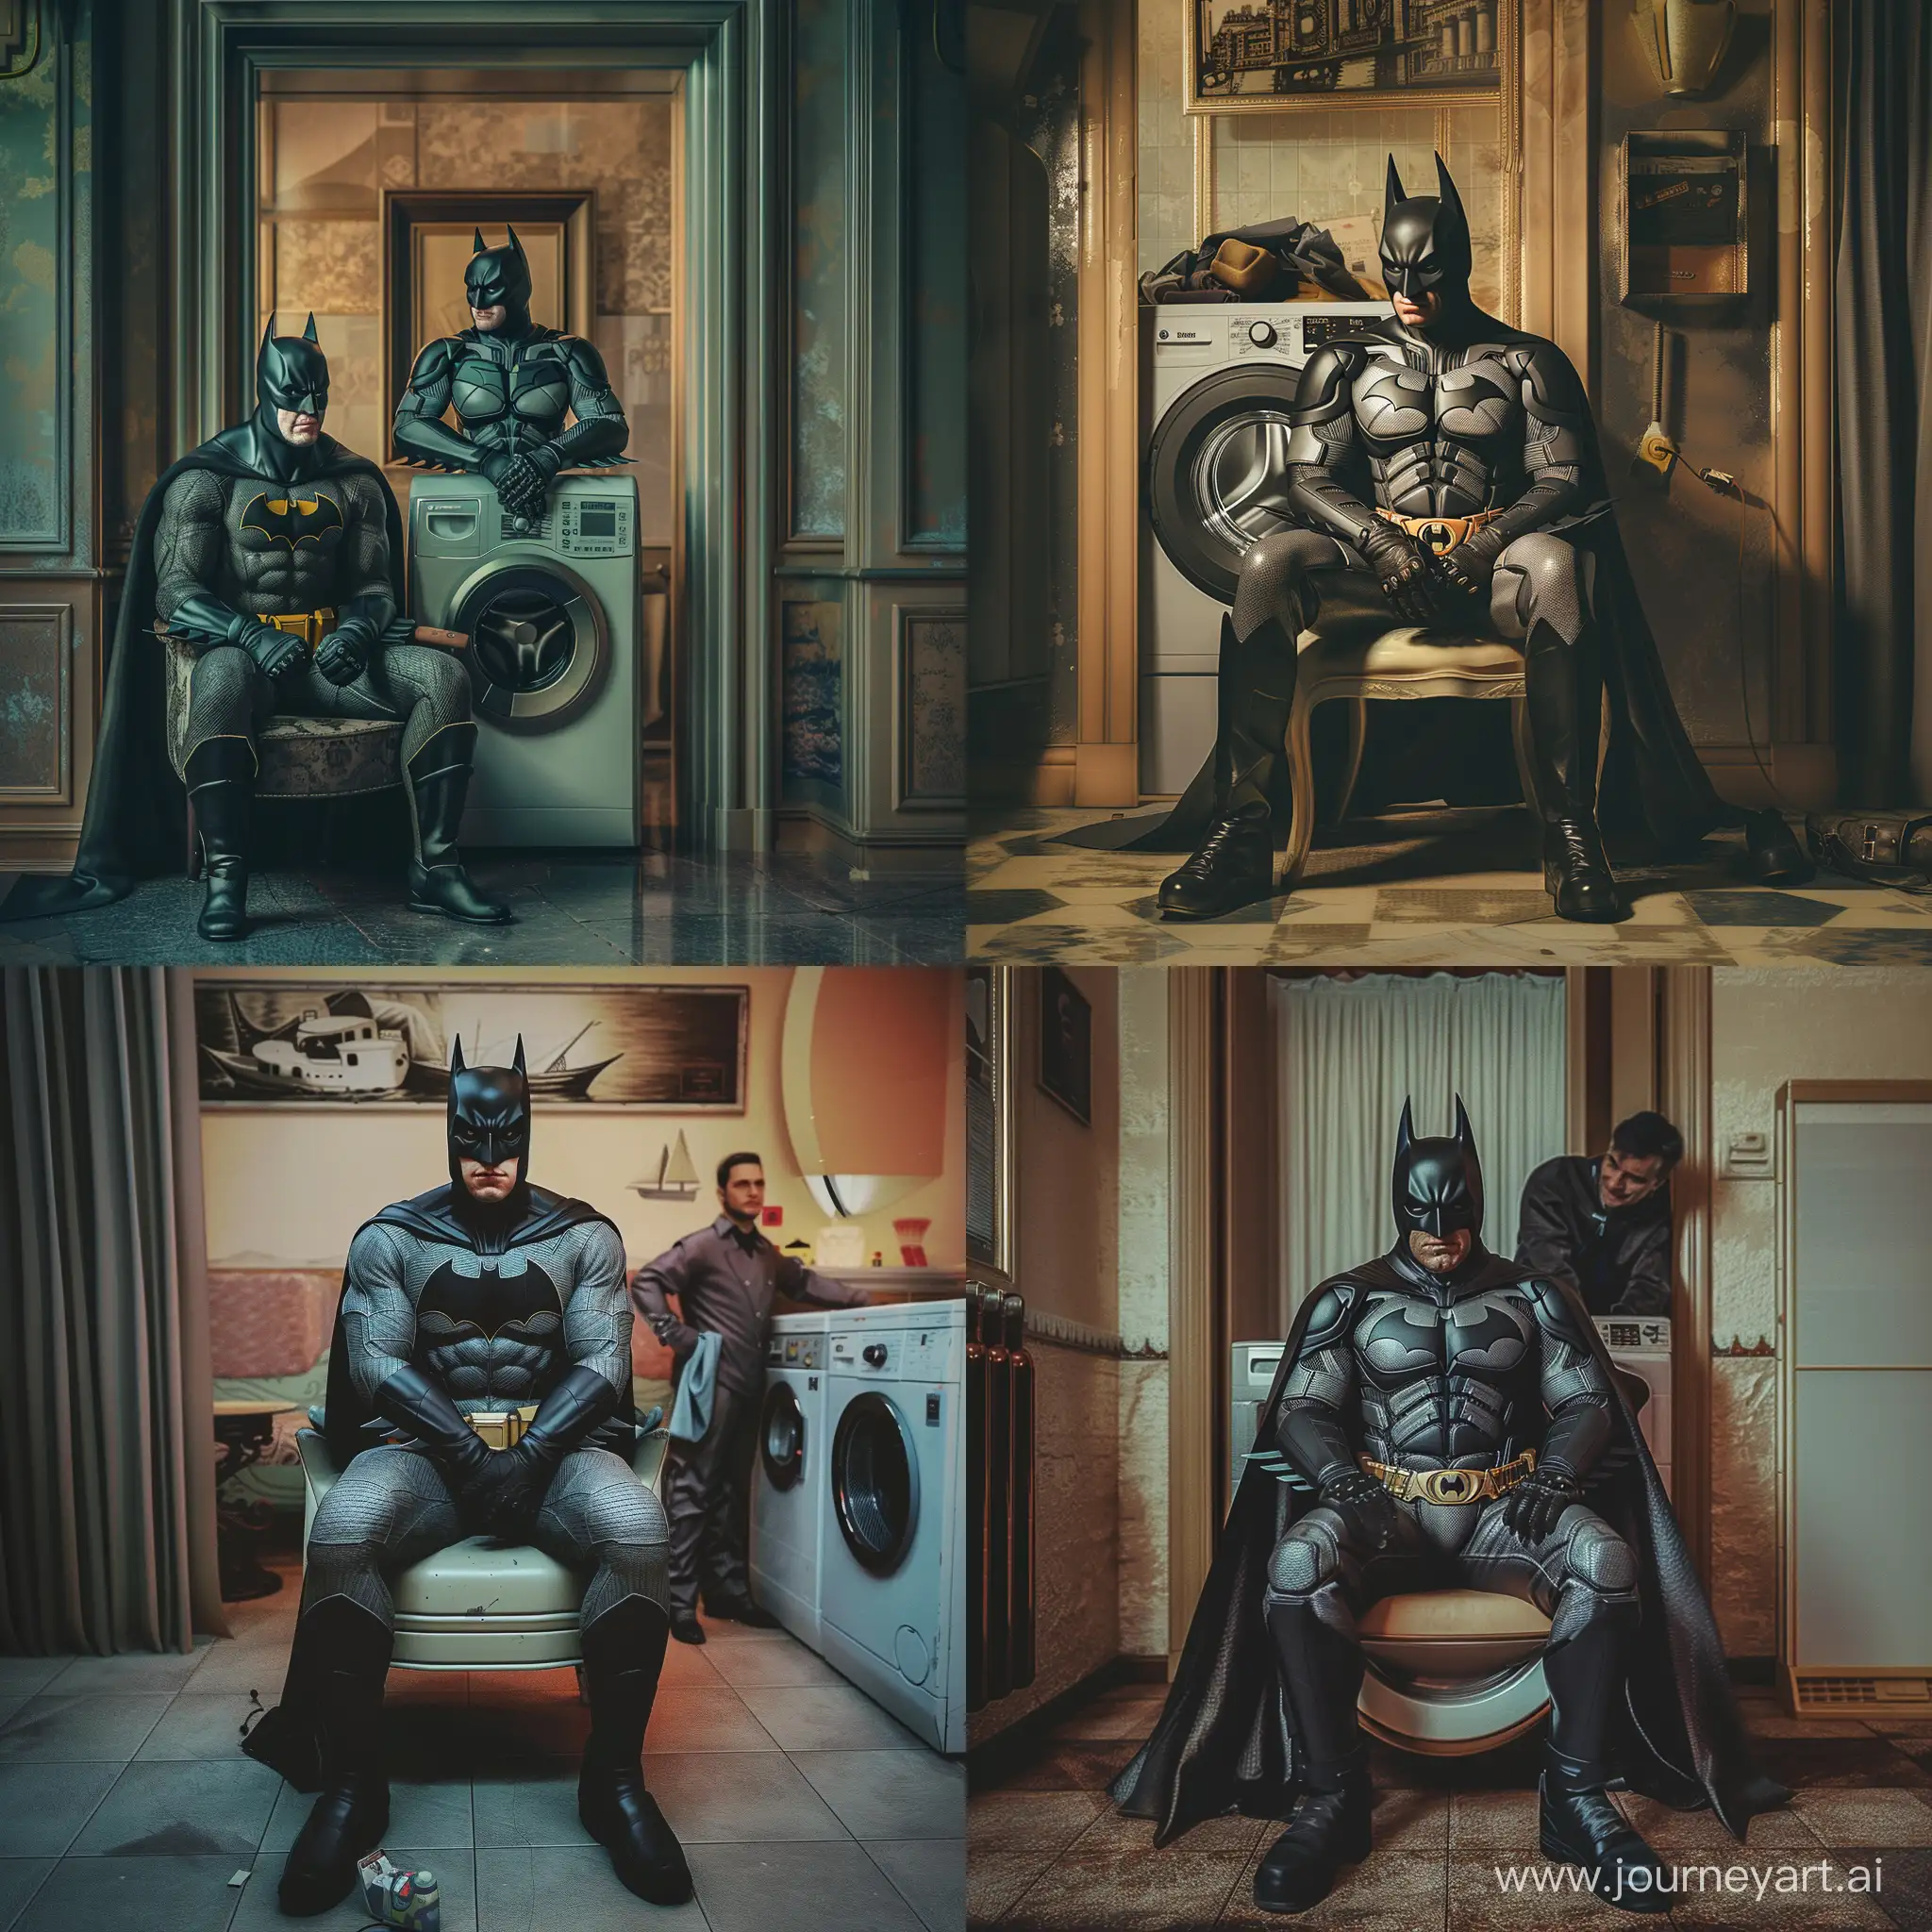 Batman-Smiles-While-Waiting-for-Washing-Machine-Repair-in-Serene-Hotel-Room